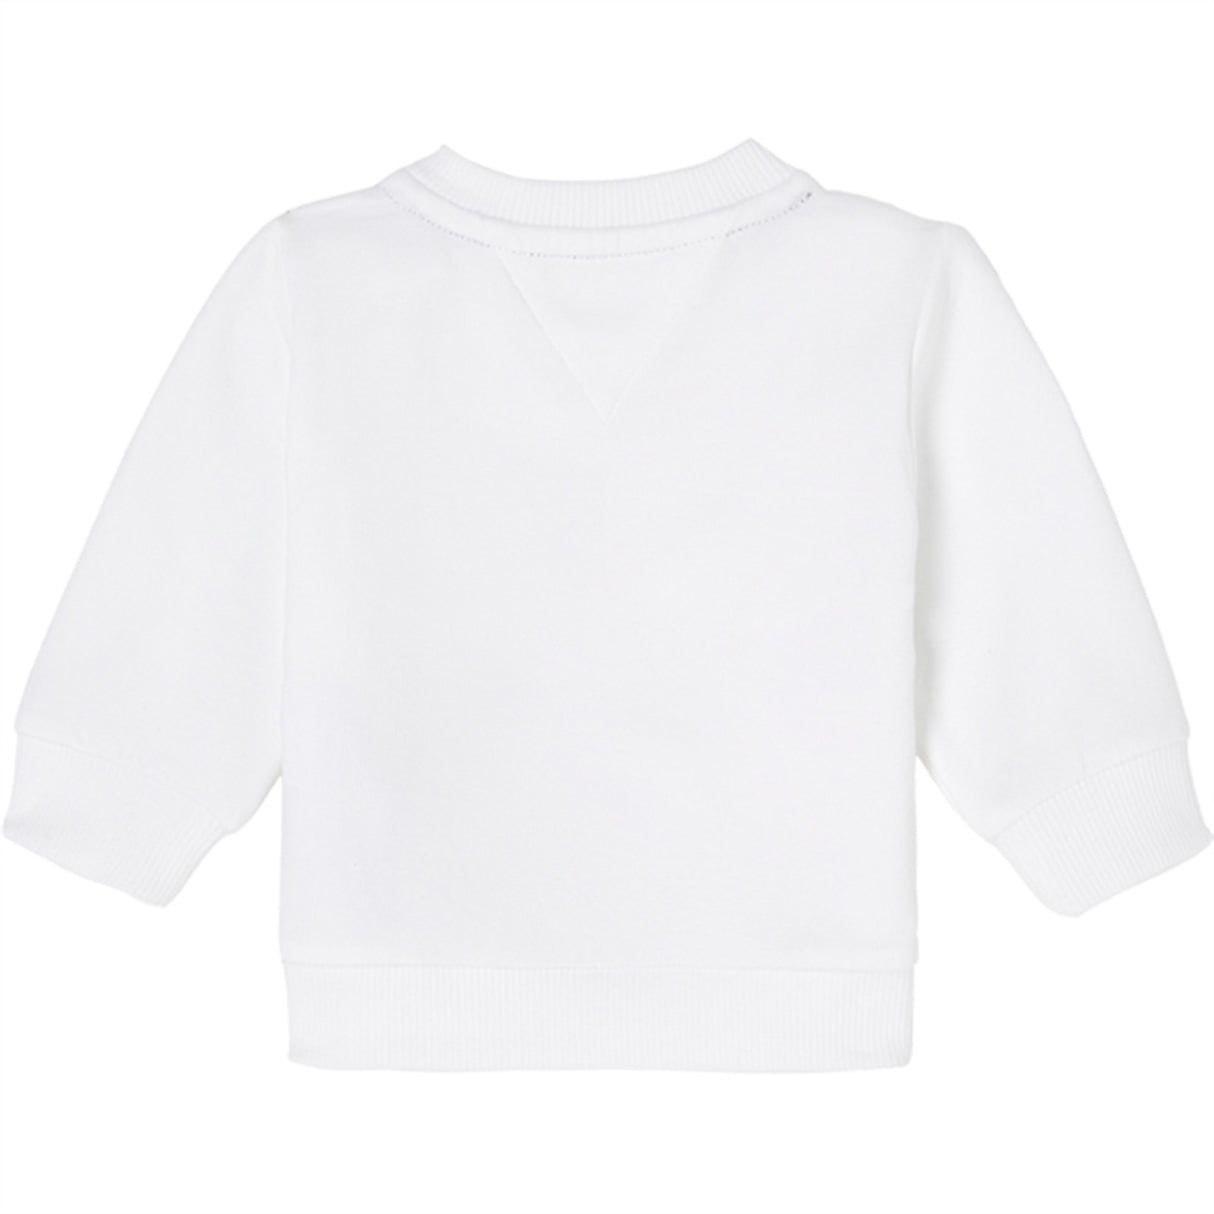 Tommy Hilfiger Baby Gingham Flag Sweatshirt White 3